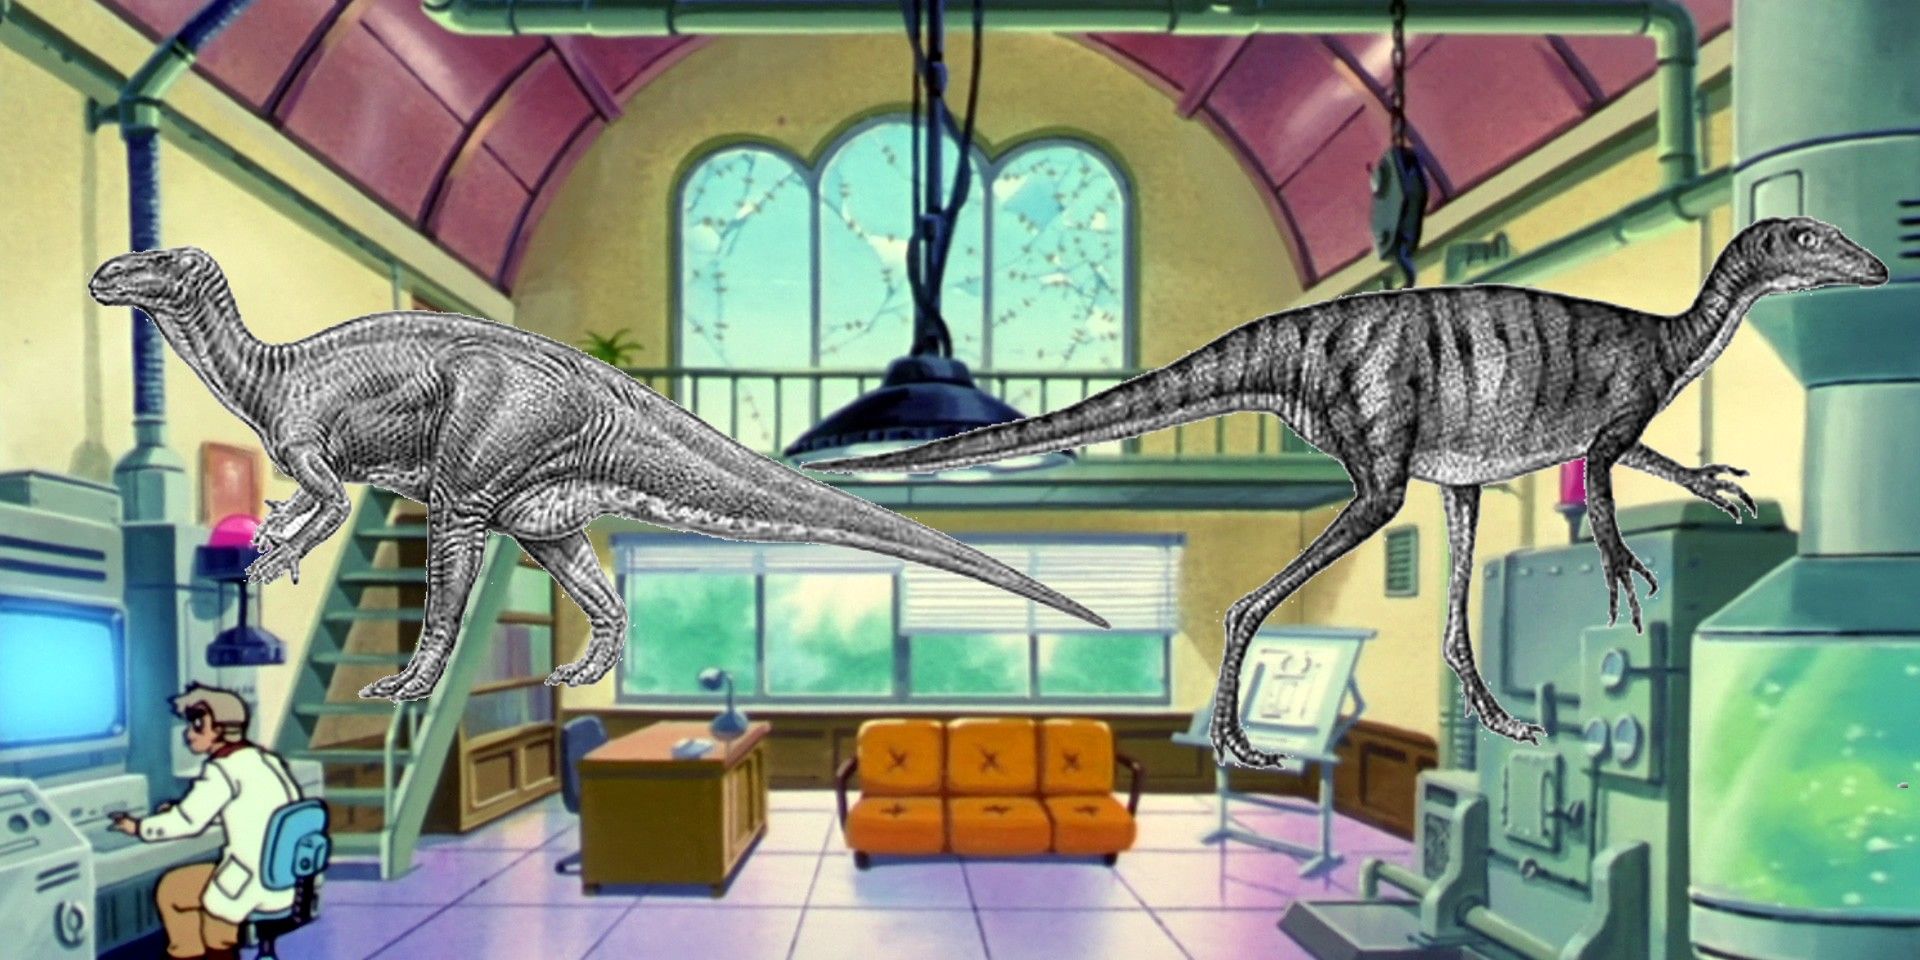 Iguanadon and Troodon black and white images edited over Professor Oak's lab.